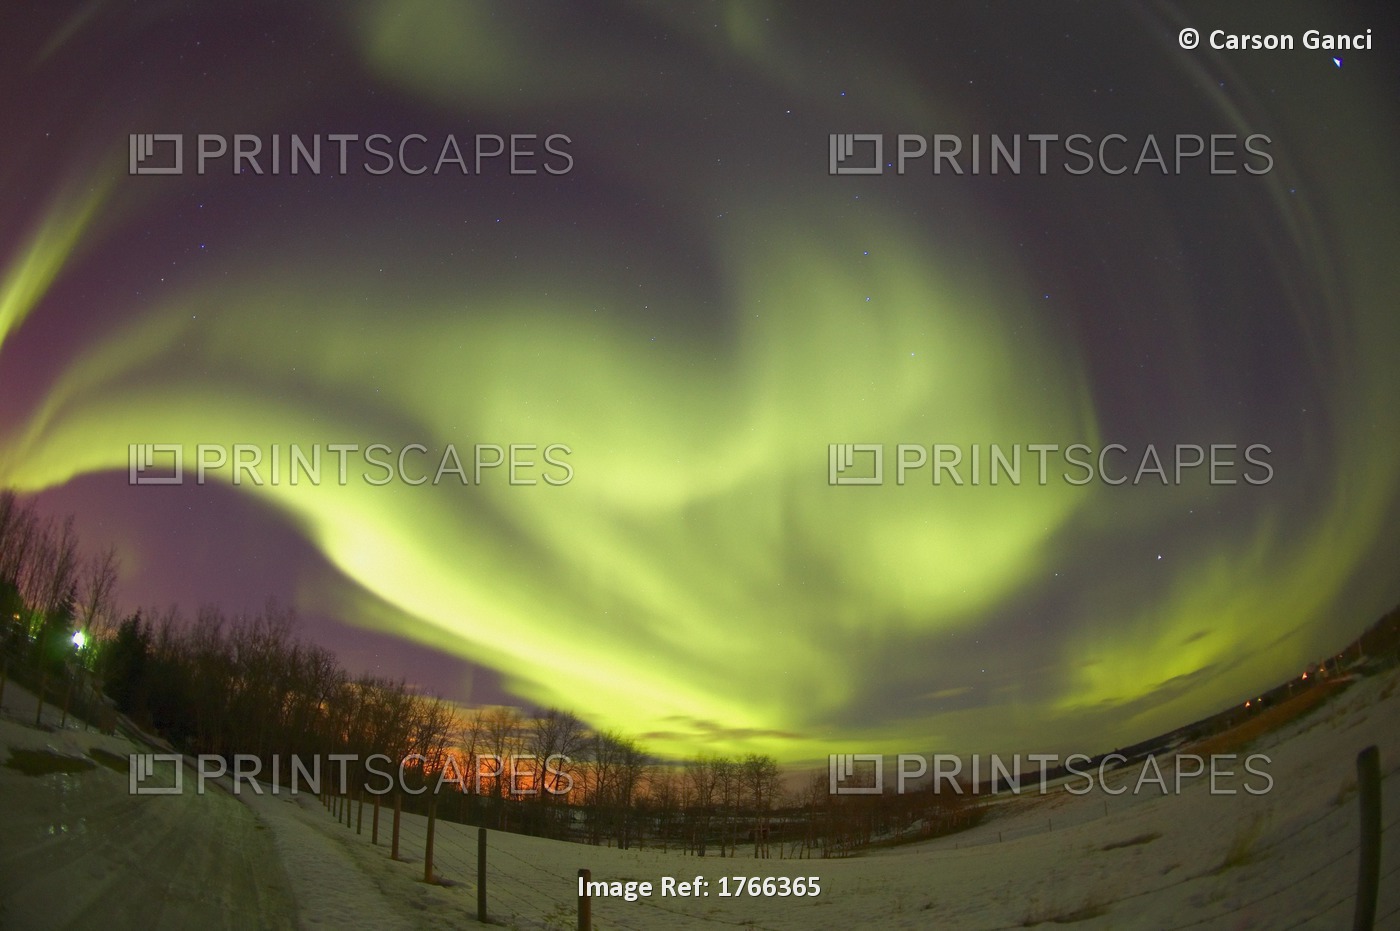 Northern Lights, Edmonton, Alberta, Canada